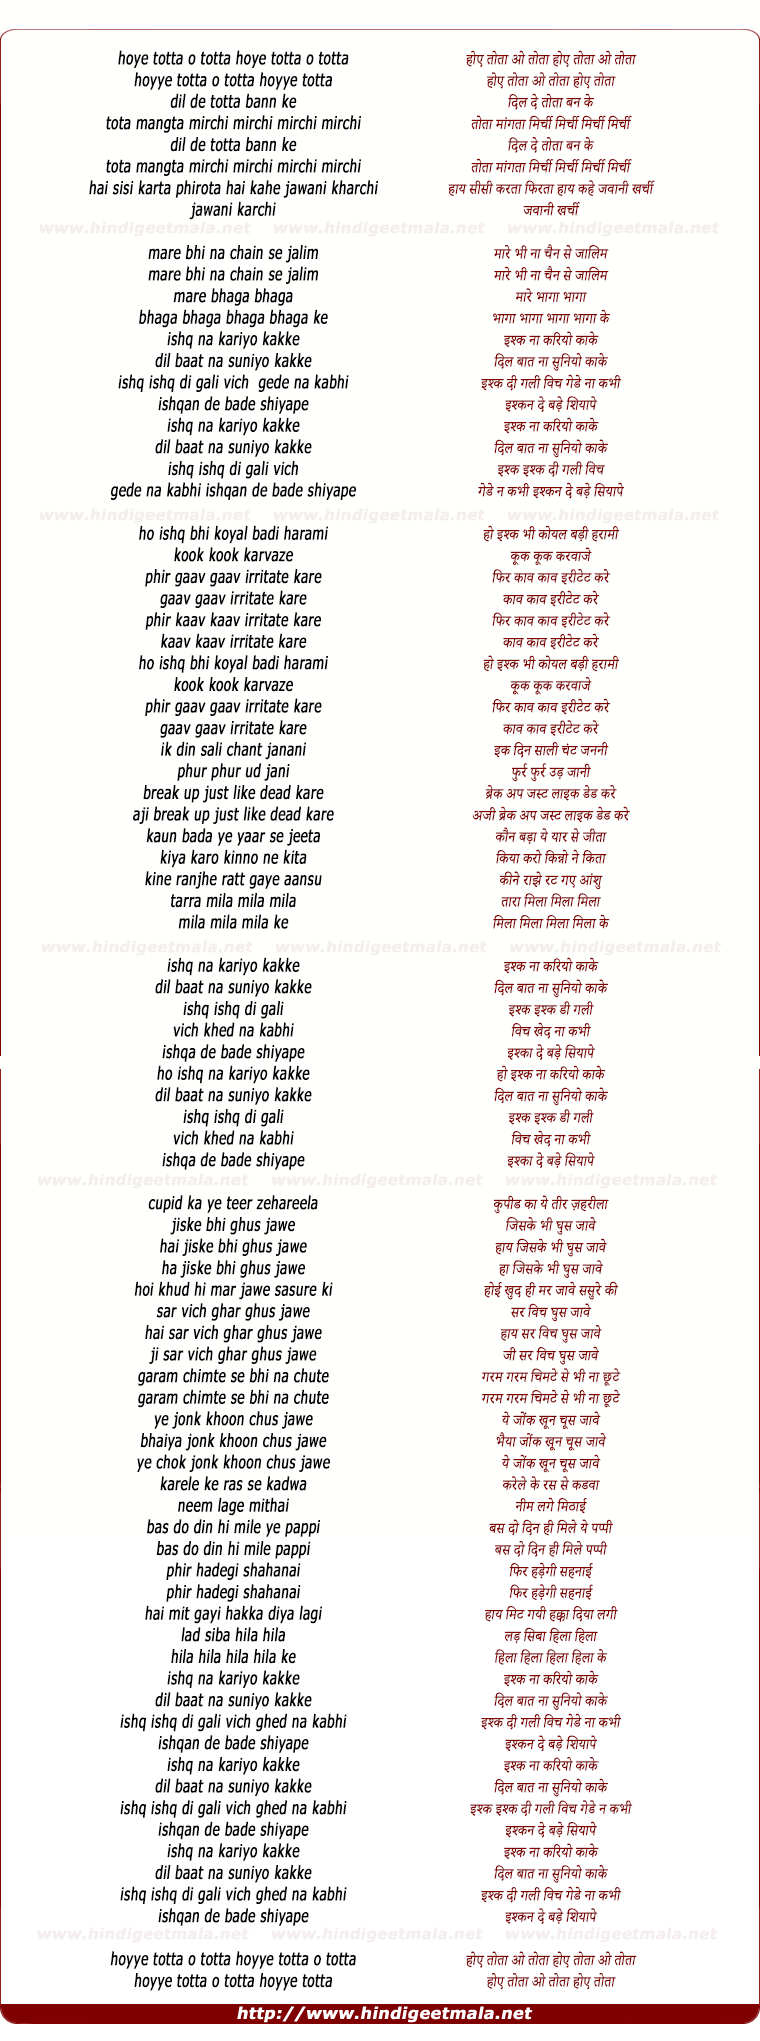 lyrics of song Ishq Naa Kariyo Kake